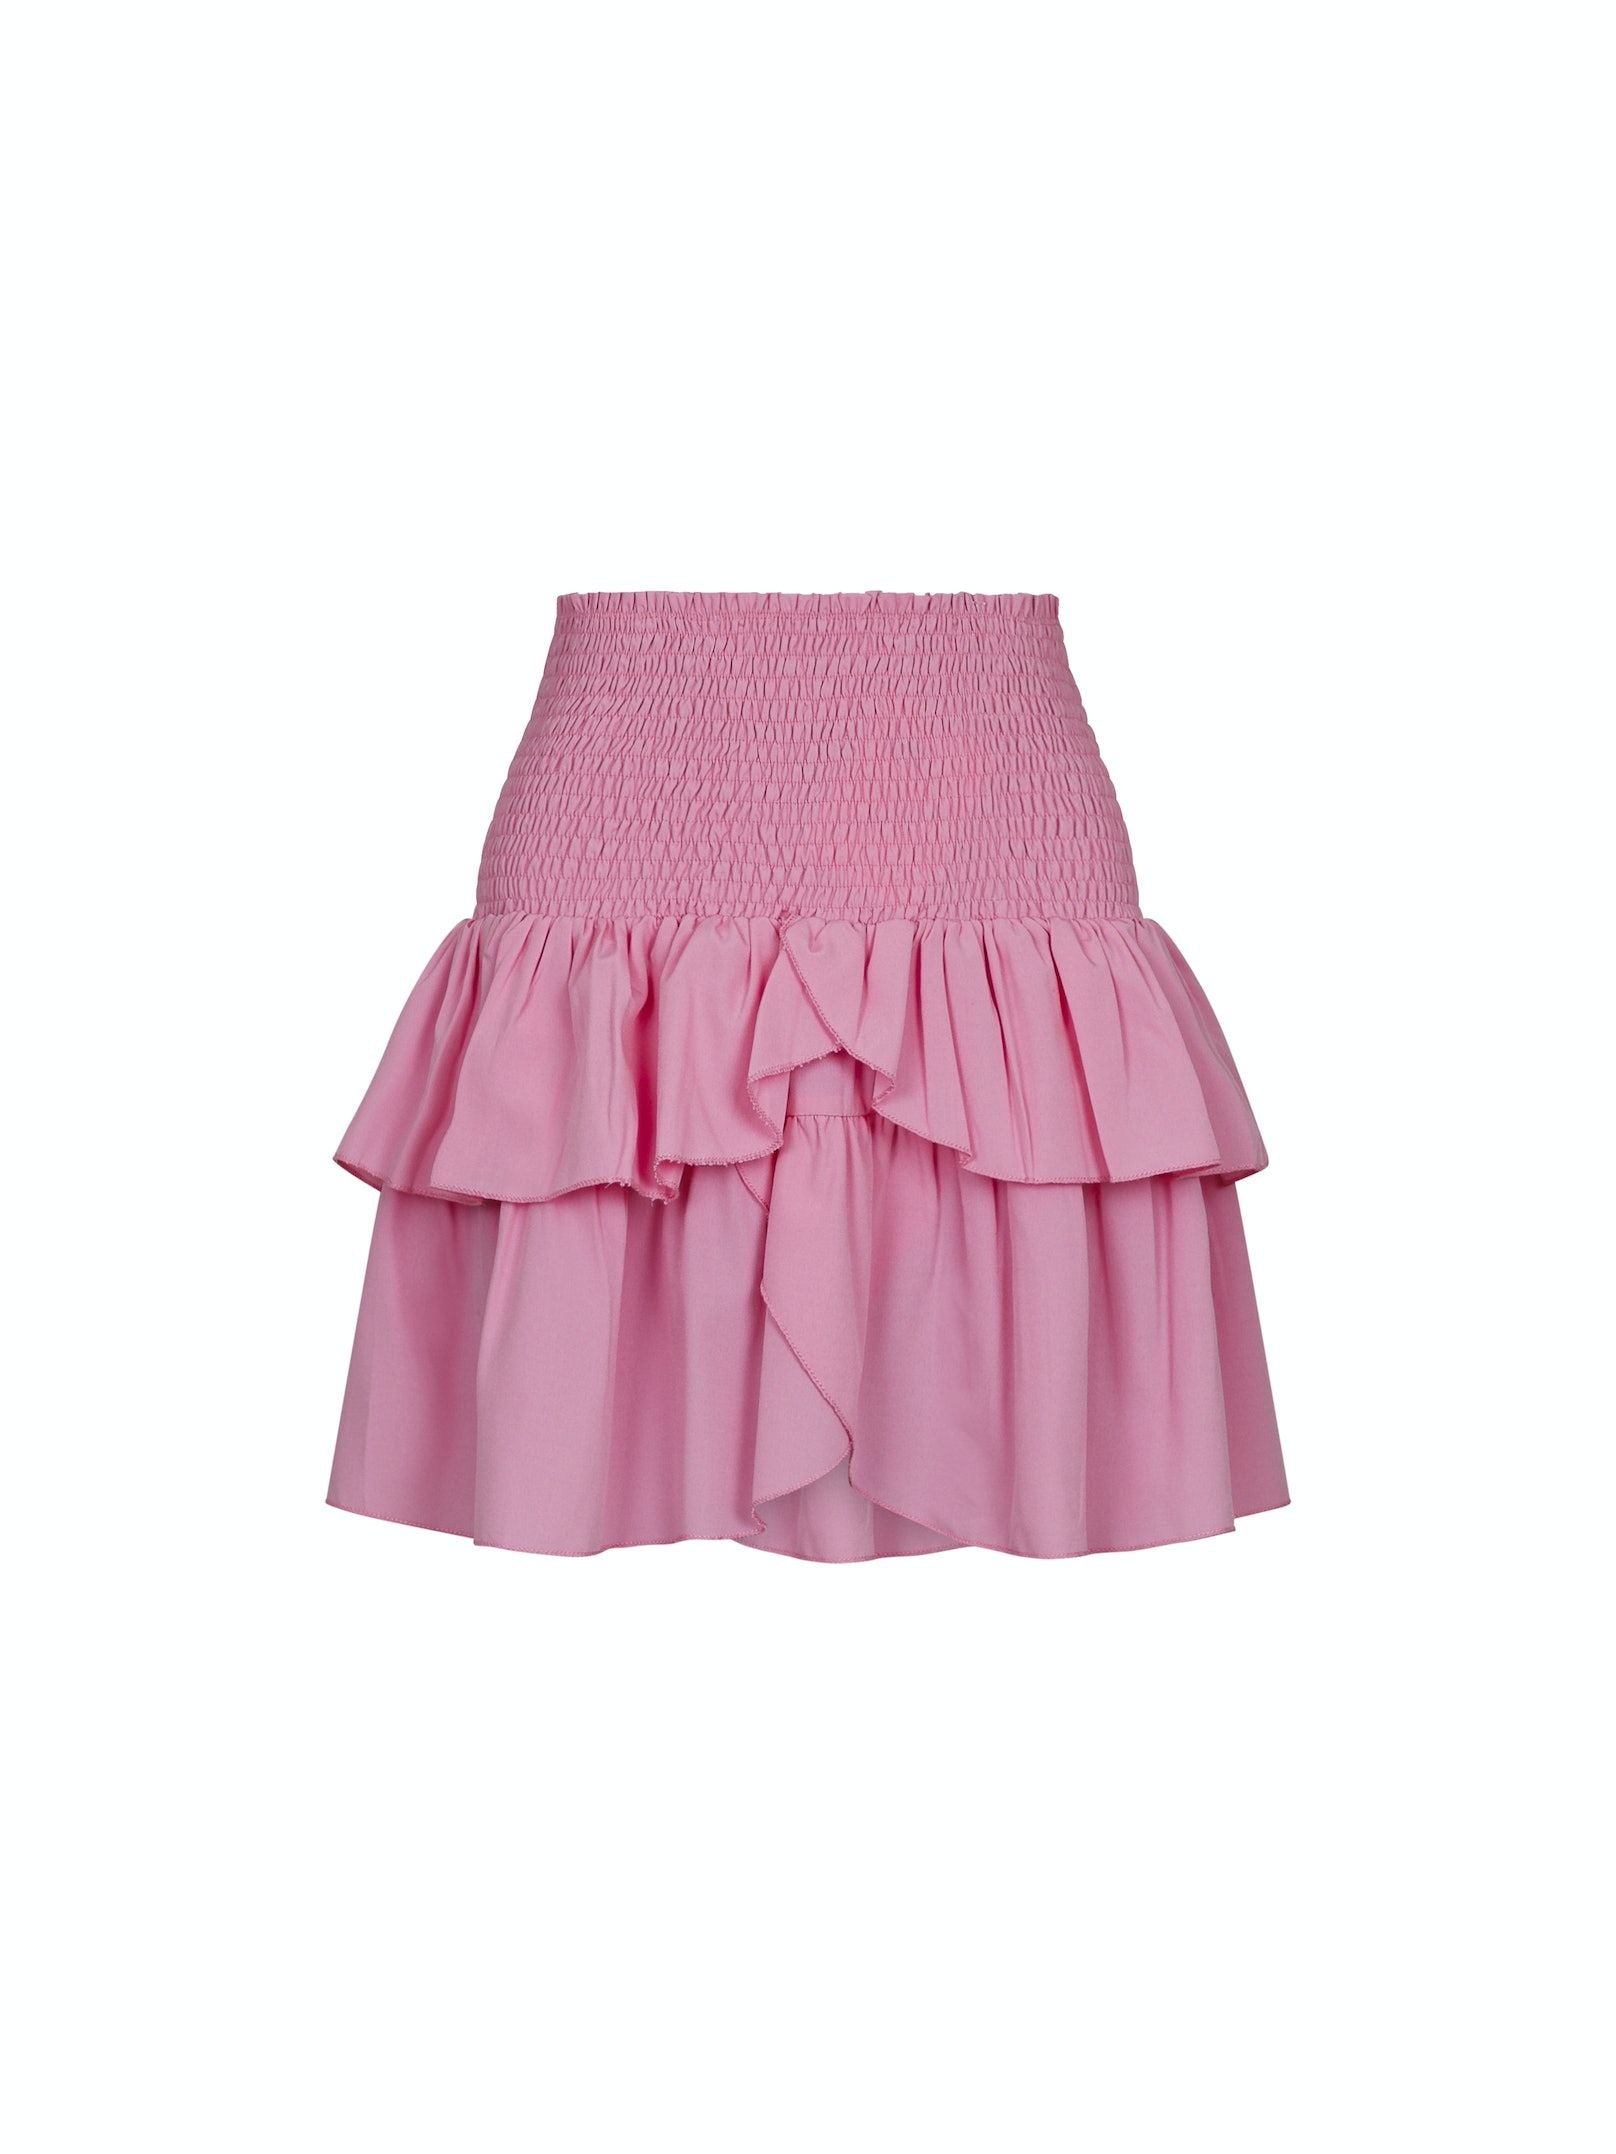 Carin Skirt Pink